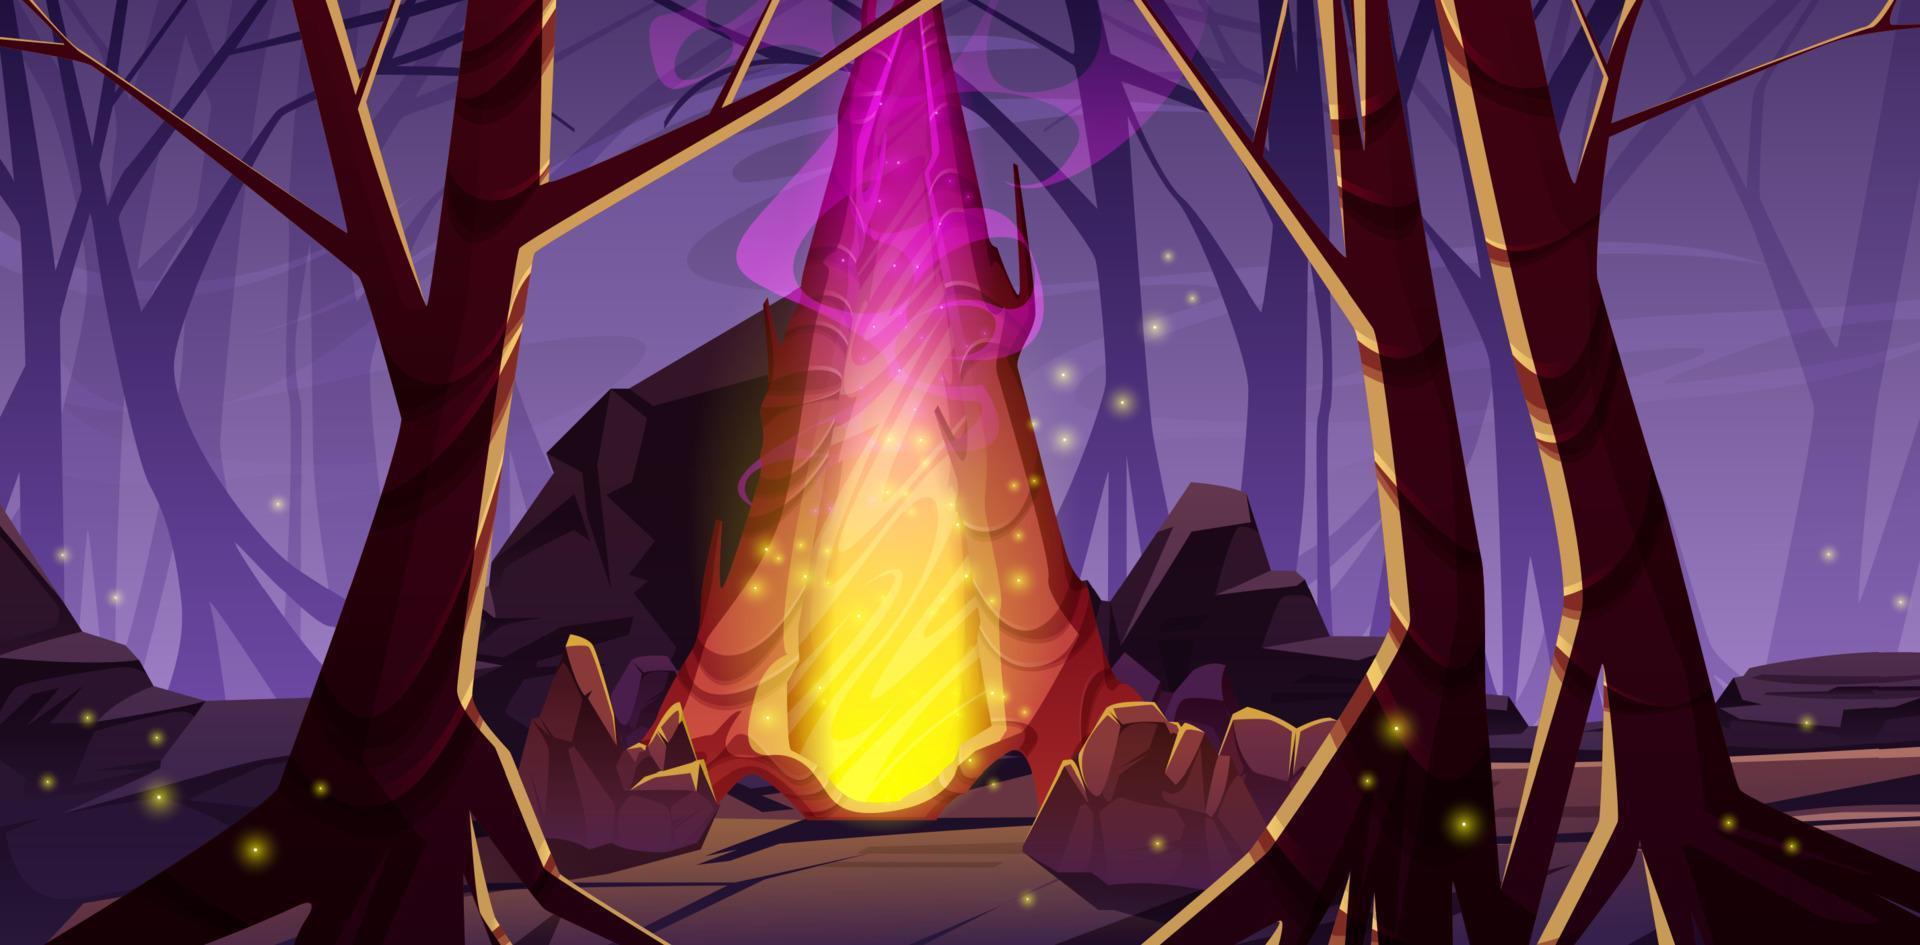 Magic portal in deep dark forest vector